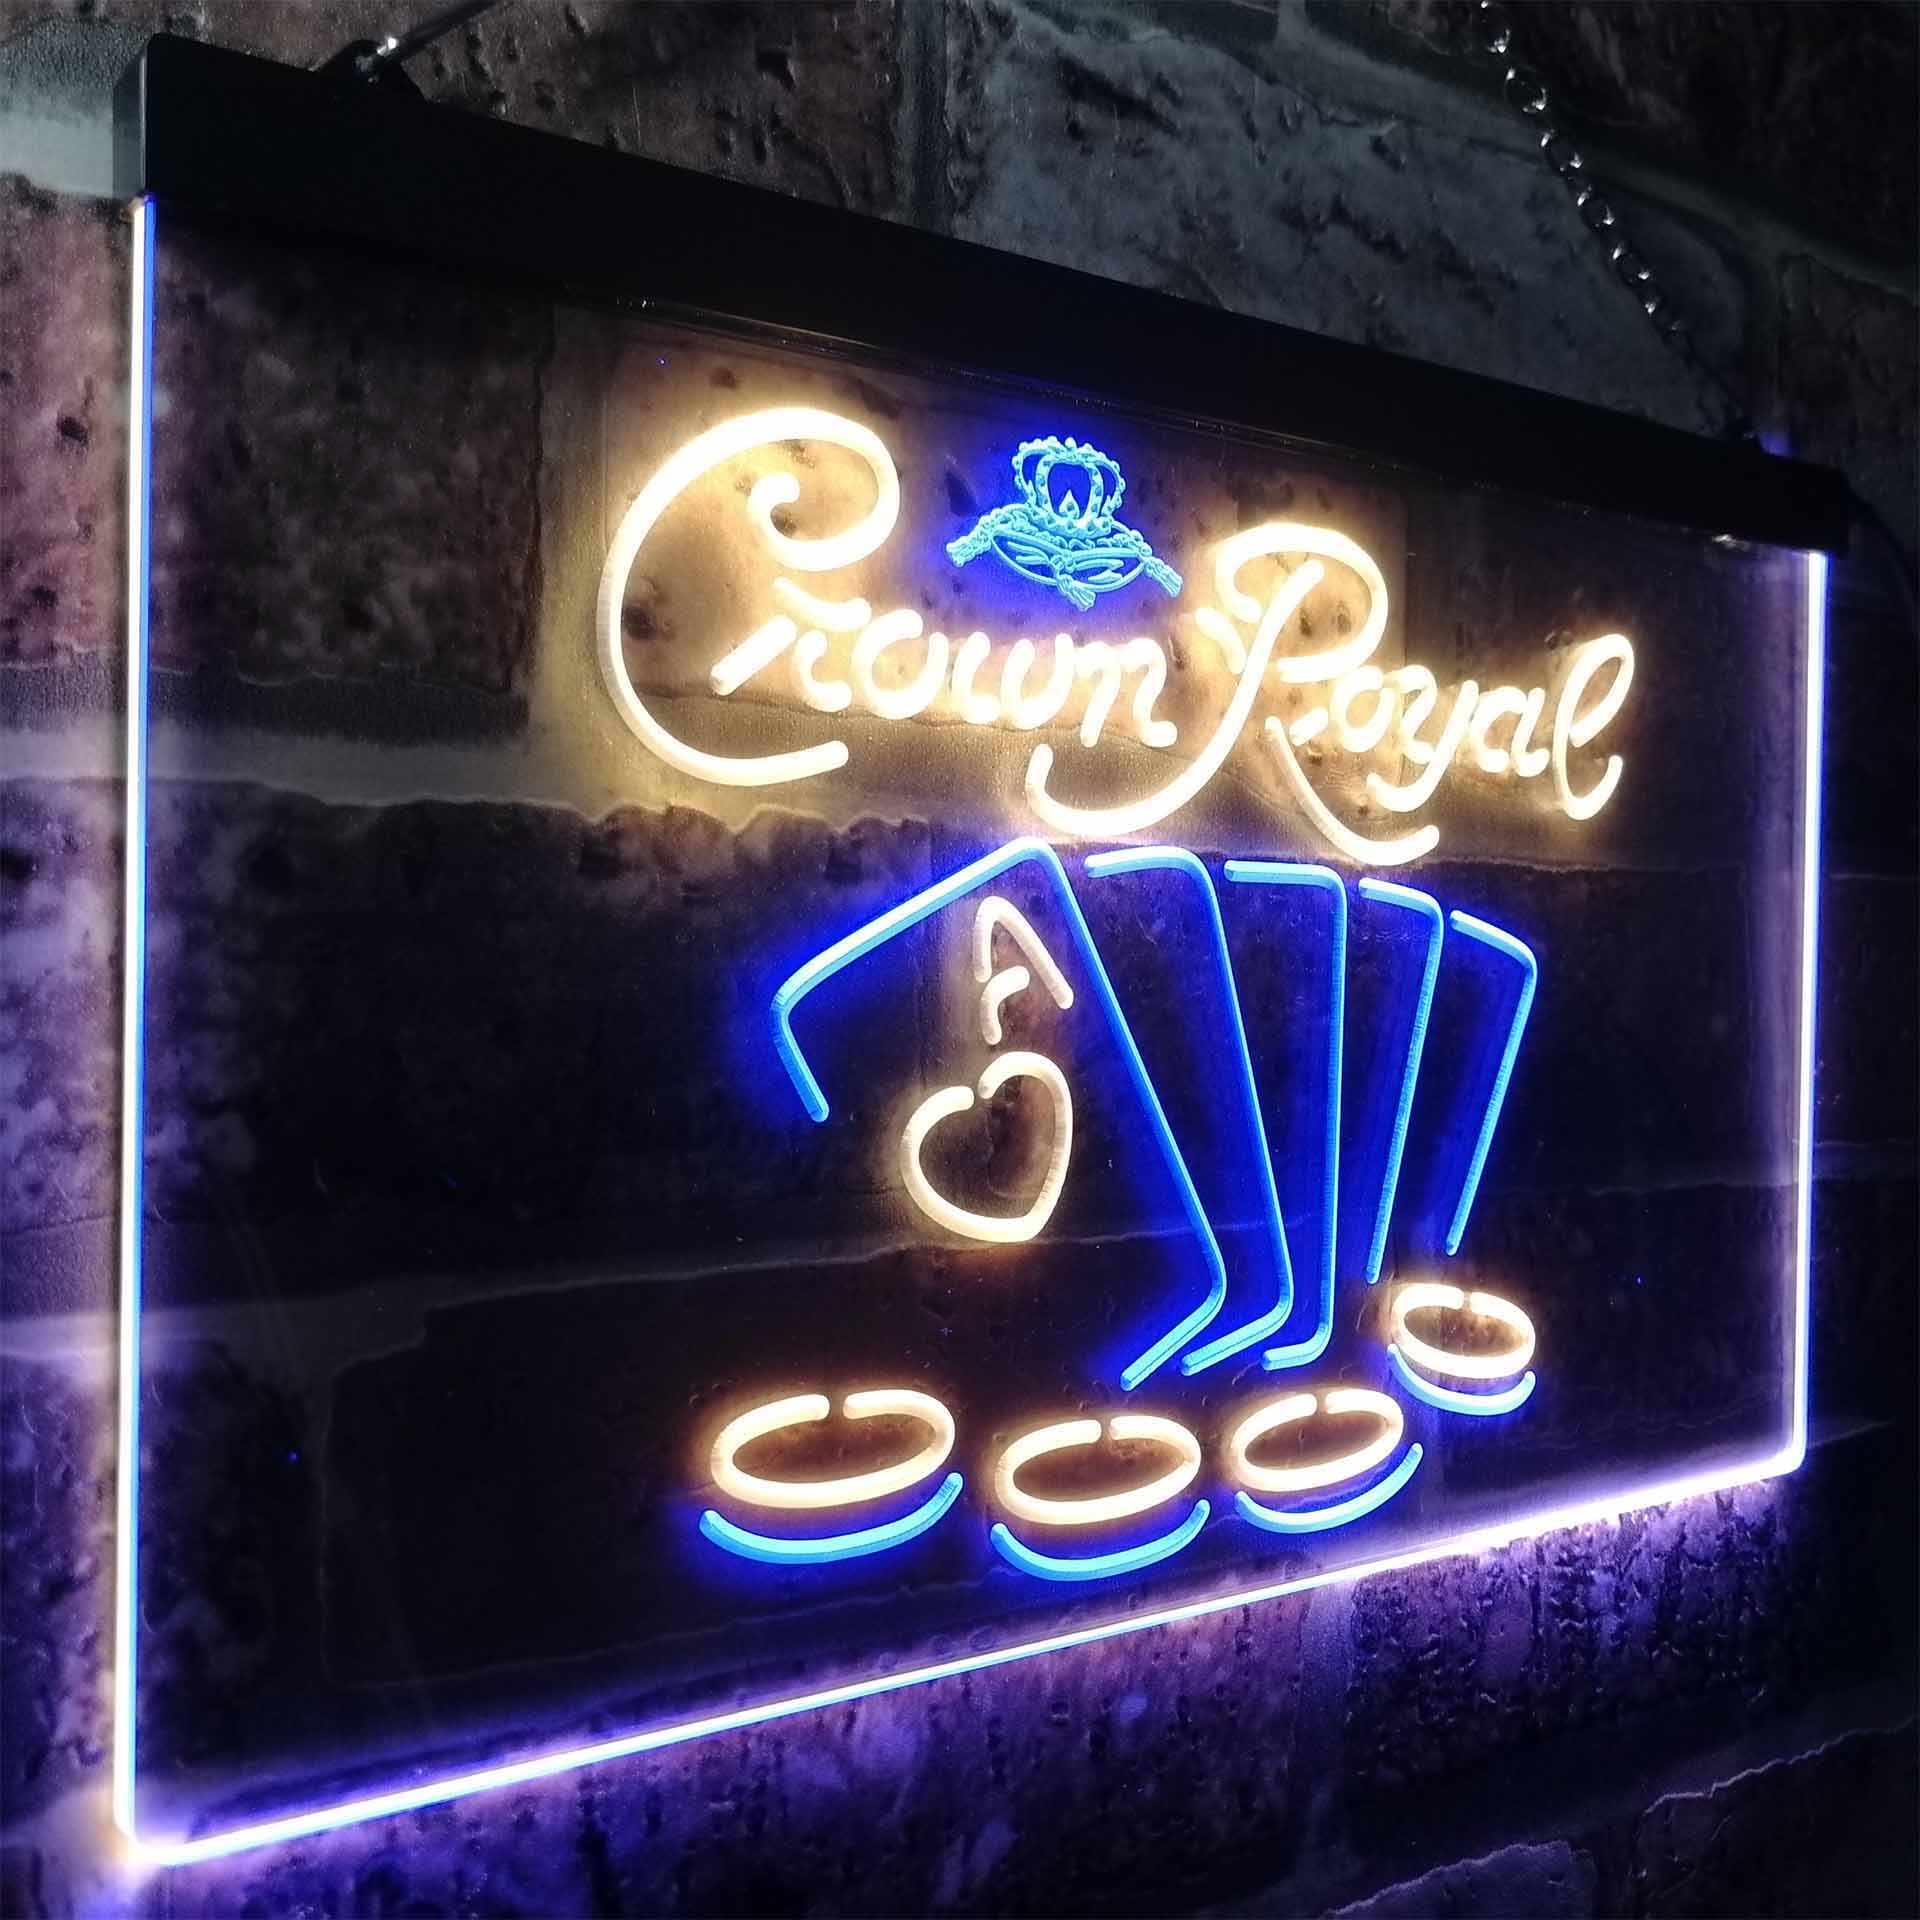 Crown Royal Casino Poker LED Neon Sign